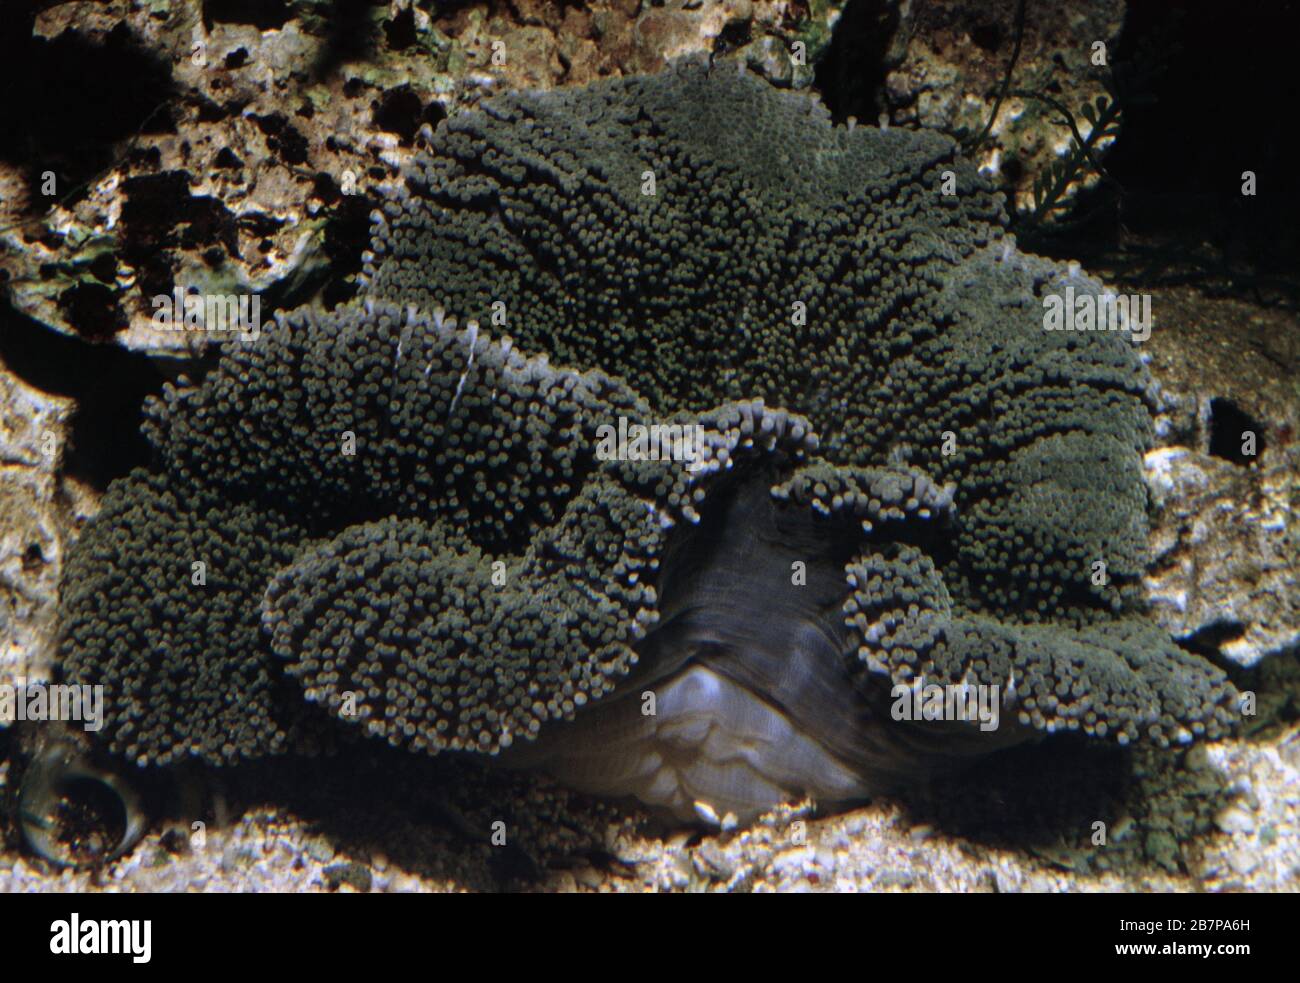 Carpet anemone, Stichodactyla mertensii Stock Photo